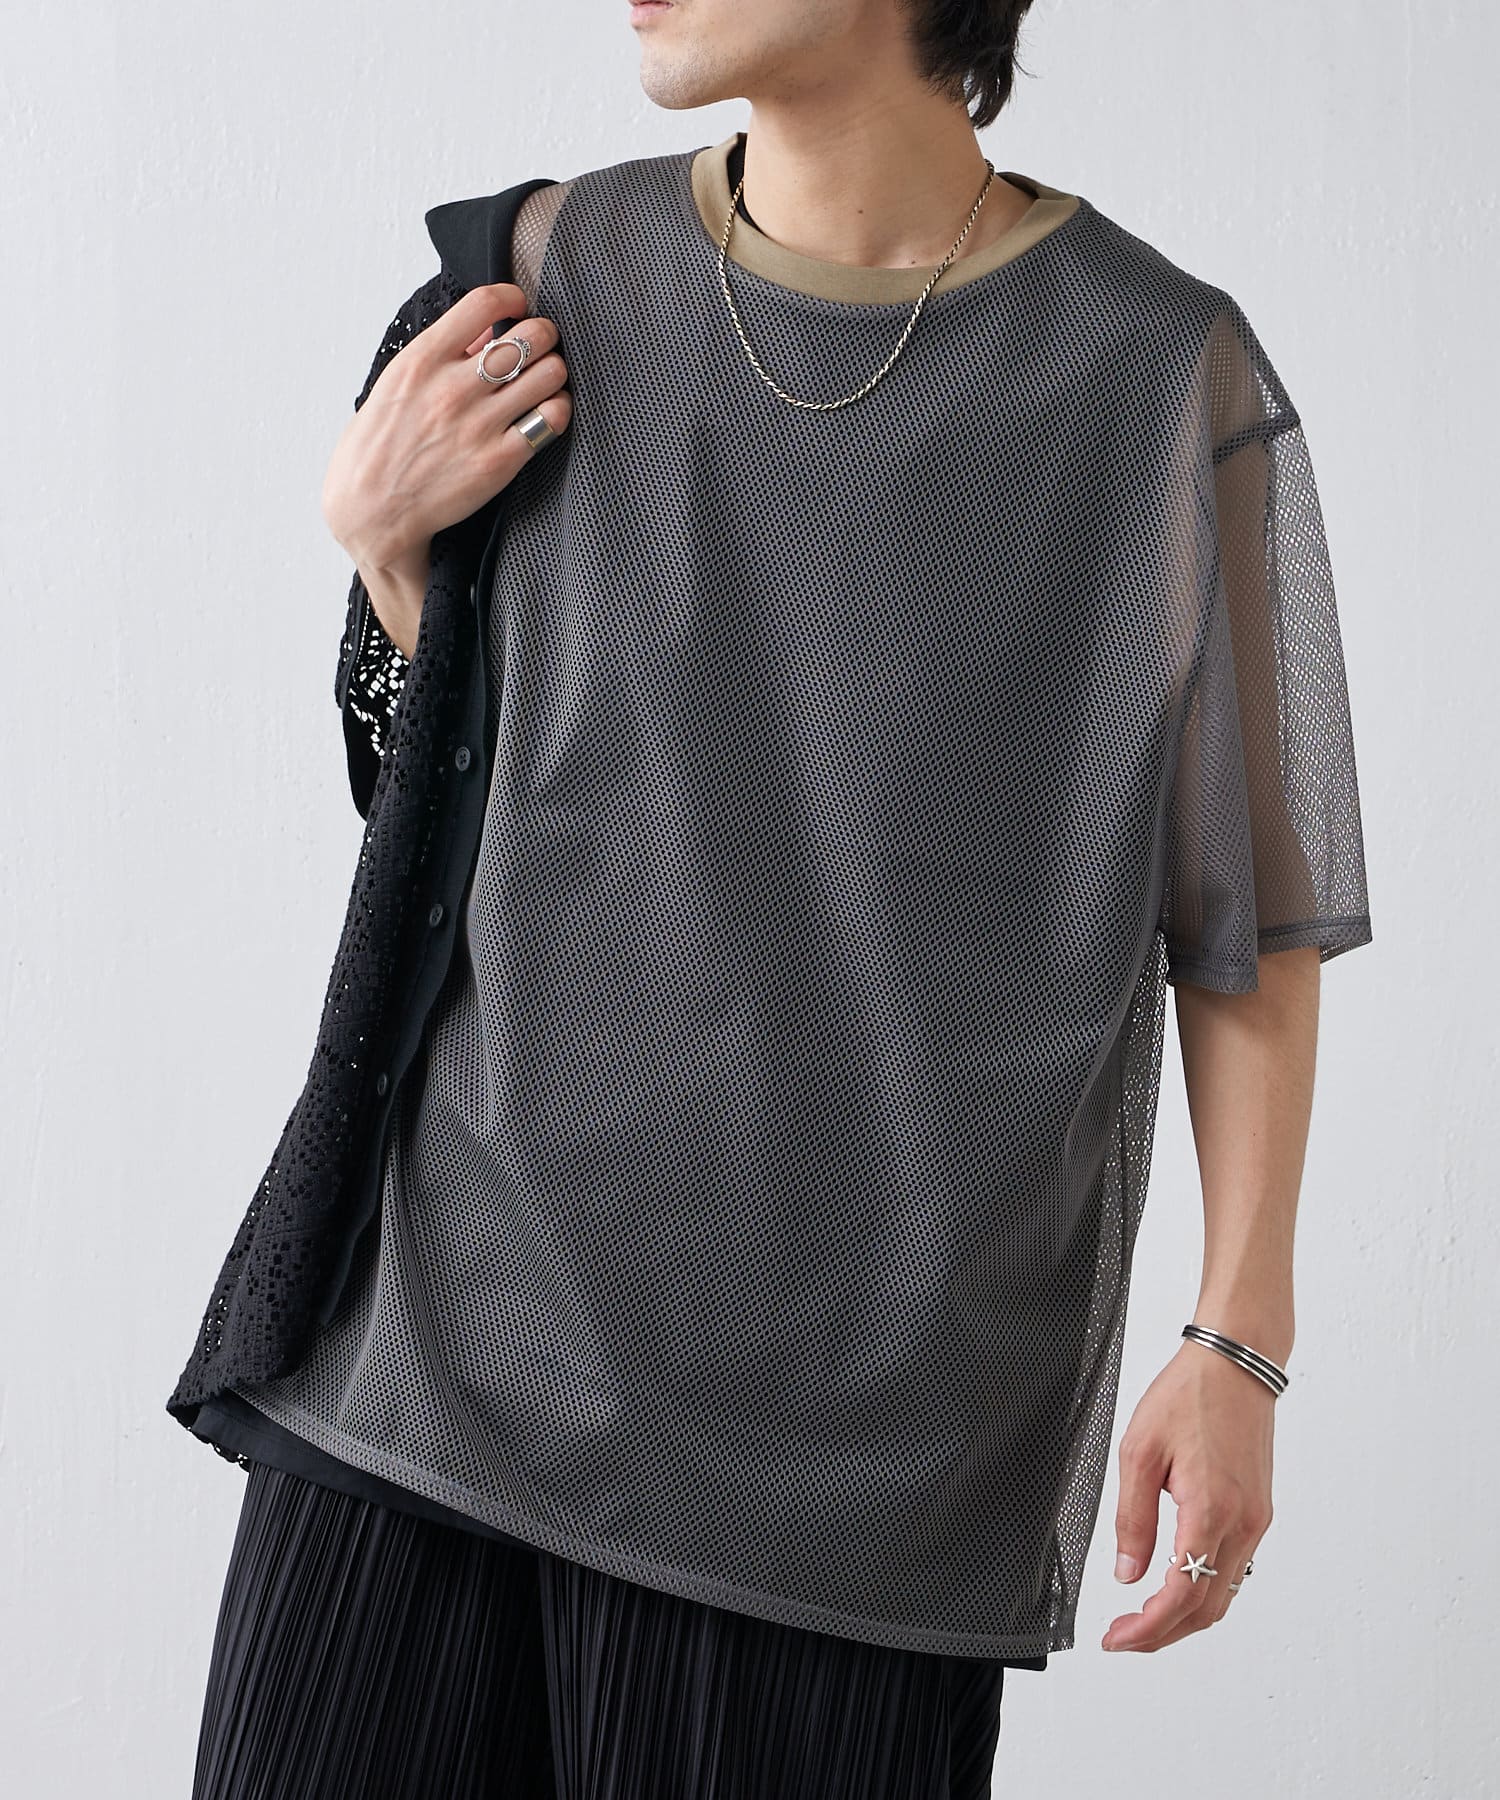 BIGメッシュTシャツ | Lui's(ルイス)メンズ | PAL CLOSET(パルクローゼット) - パルグループ公式ファッション通販サイト